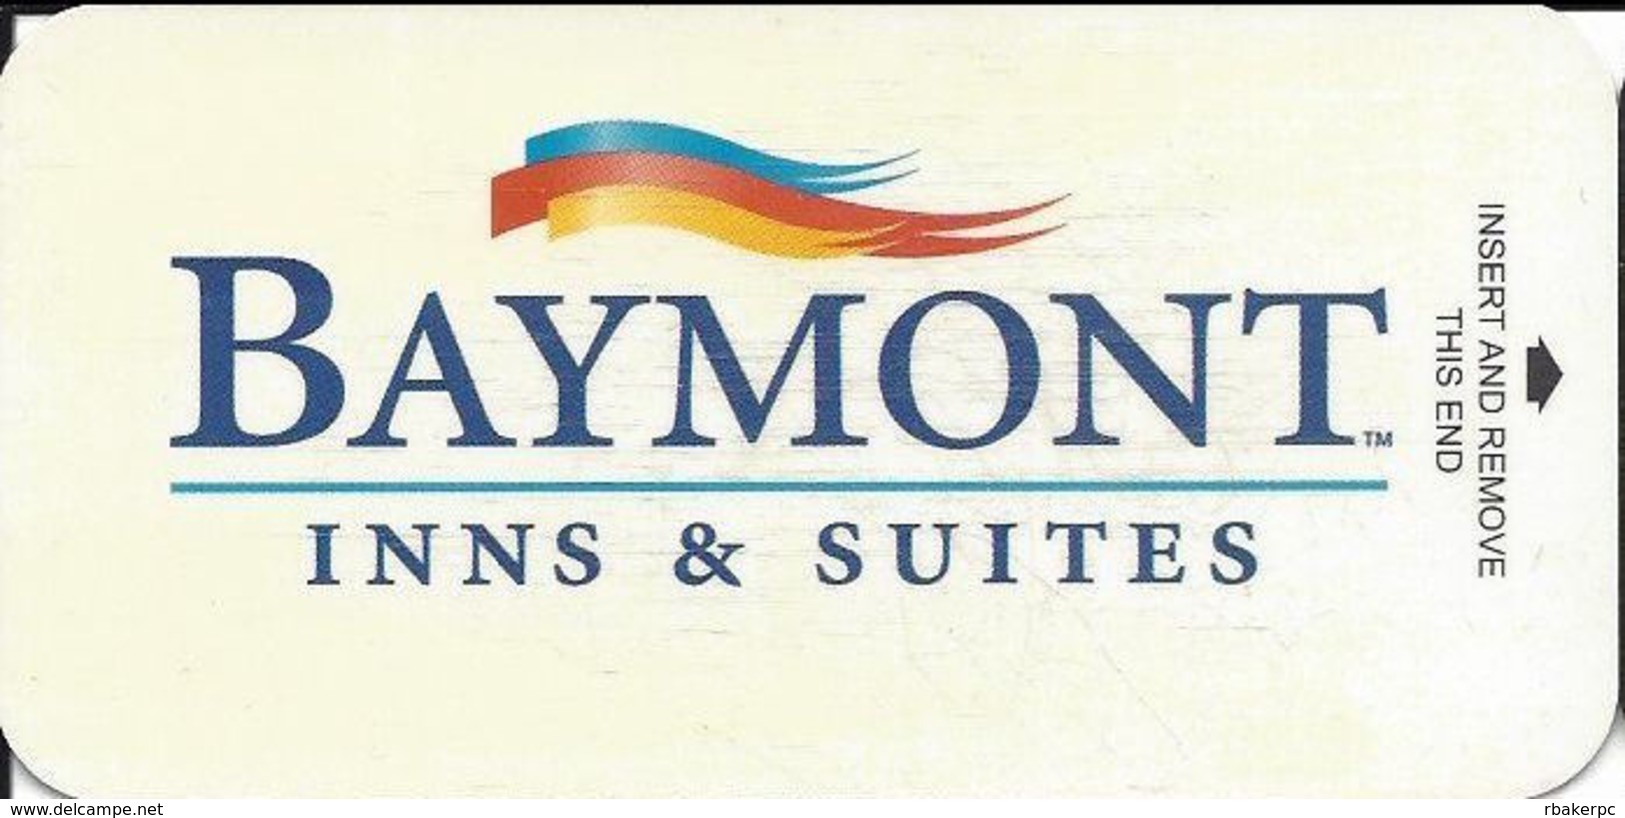 Baymont Narrow Hotel Room Key Card - Hotel Keycards